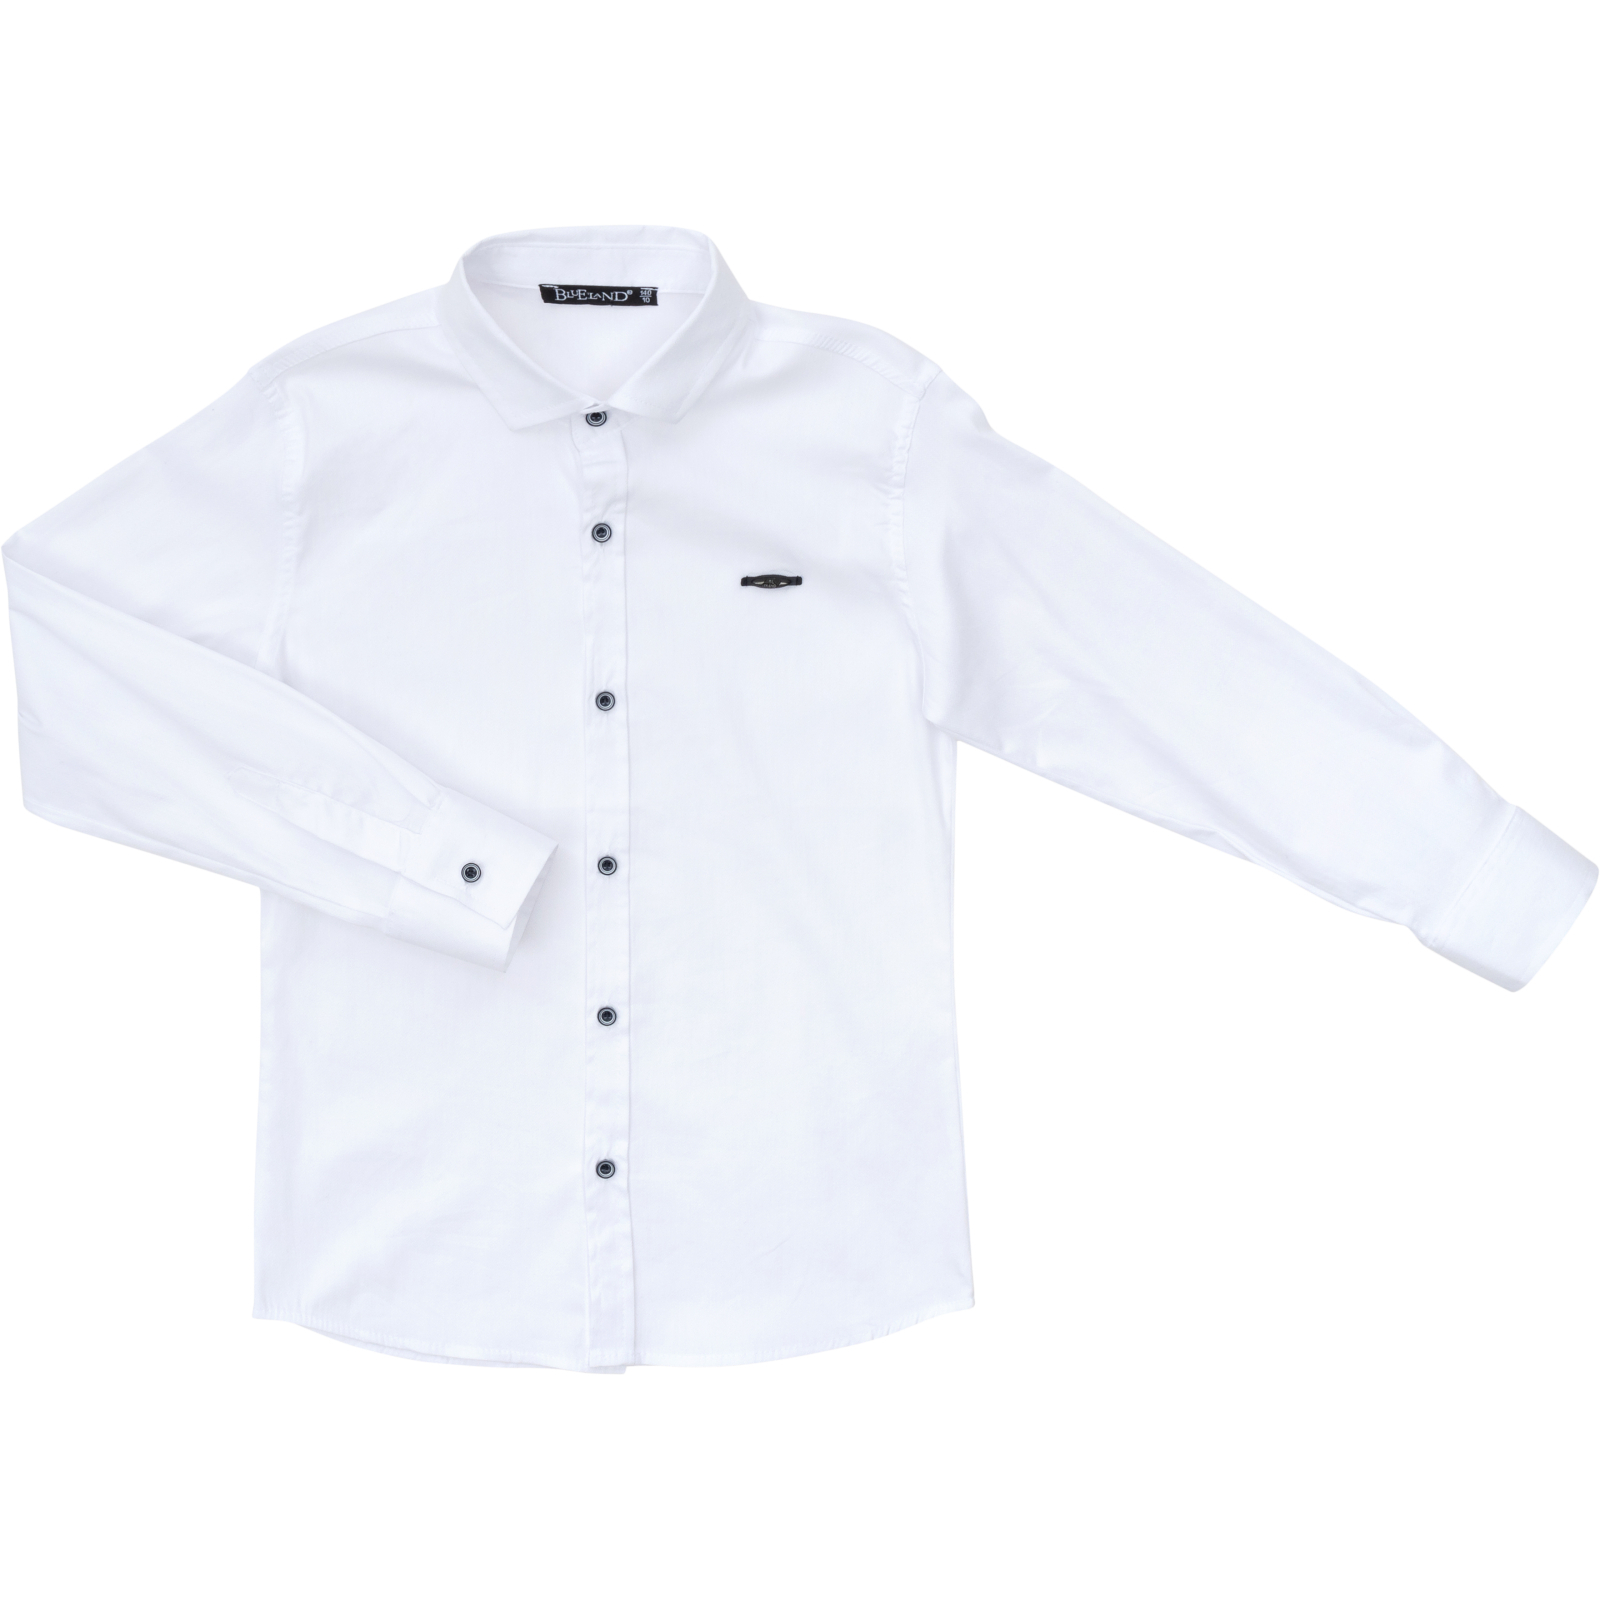 Рубашка Blueland с длинным рукавом (10680-158B-white)